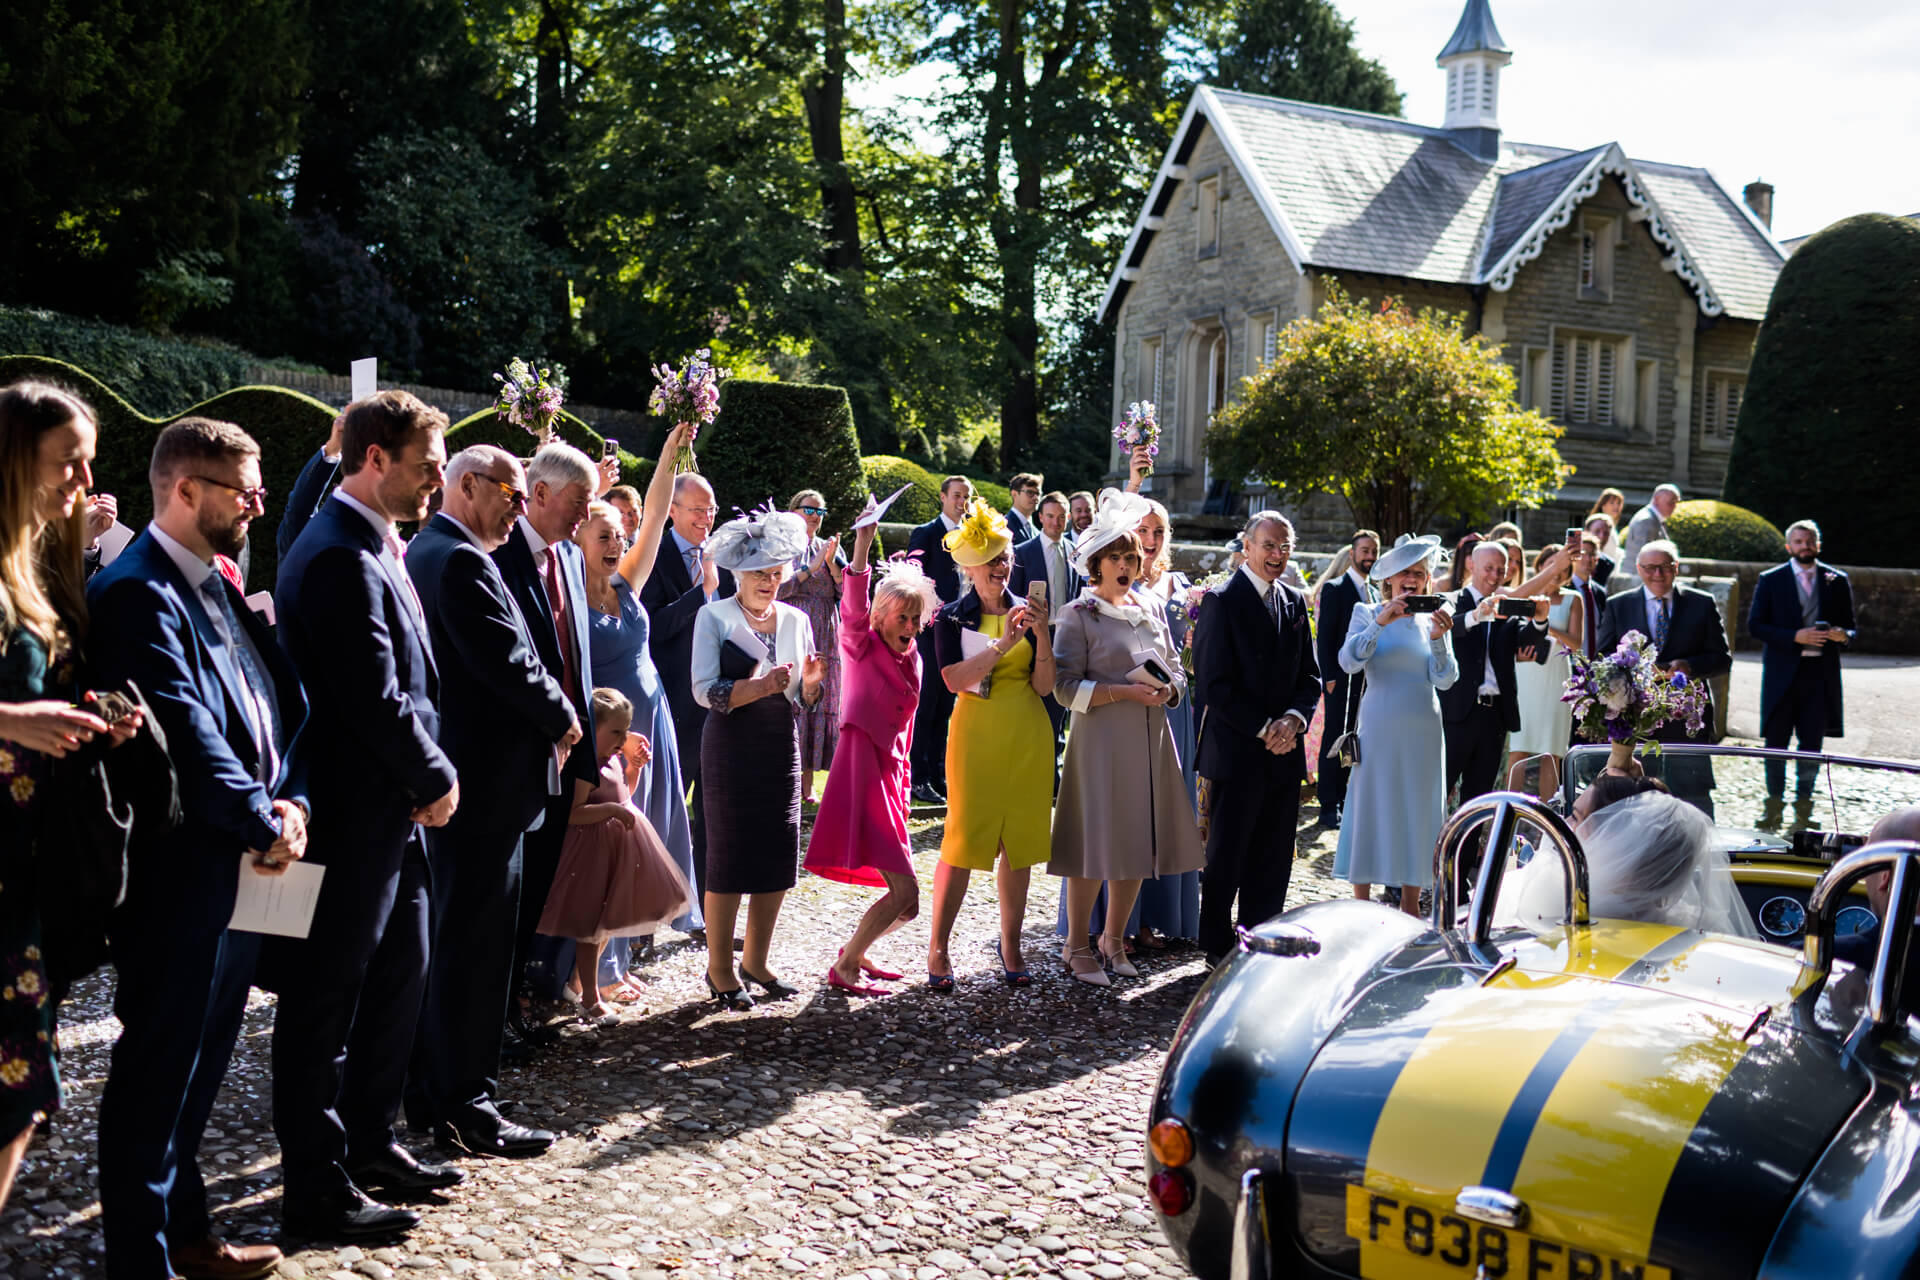 wedding guests cheer as the wedding car departs